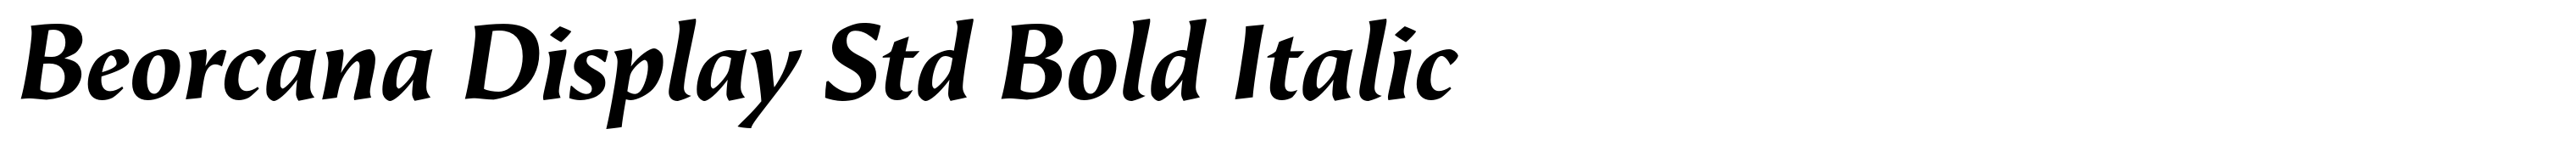 Beorcana Display Std Bold Italic